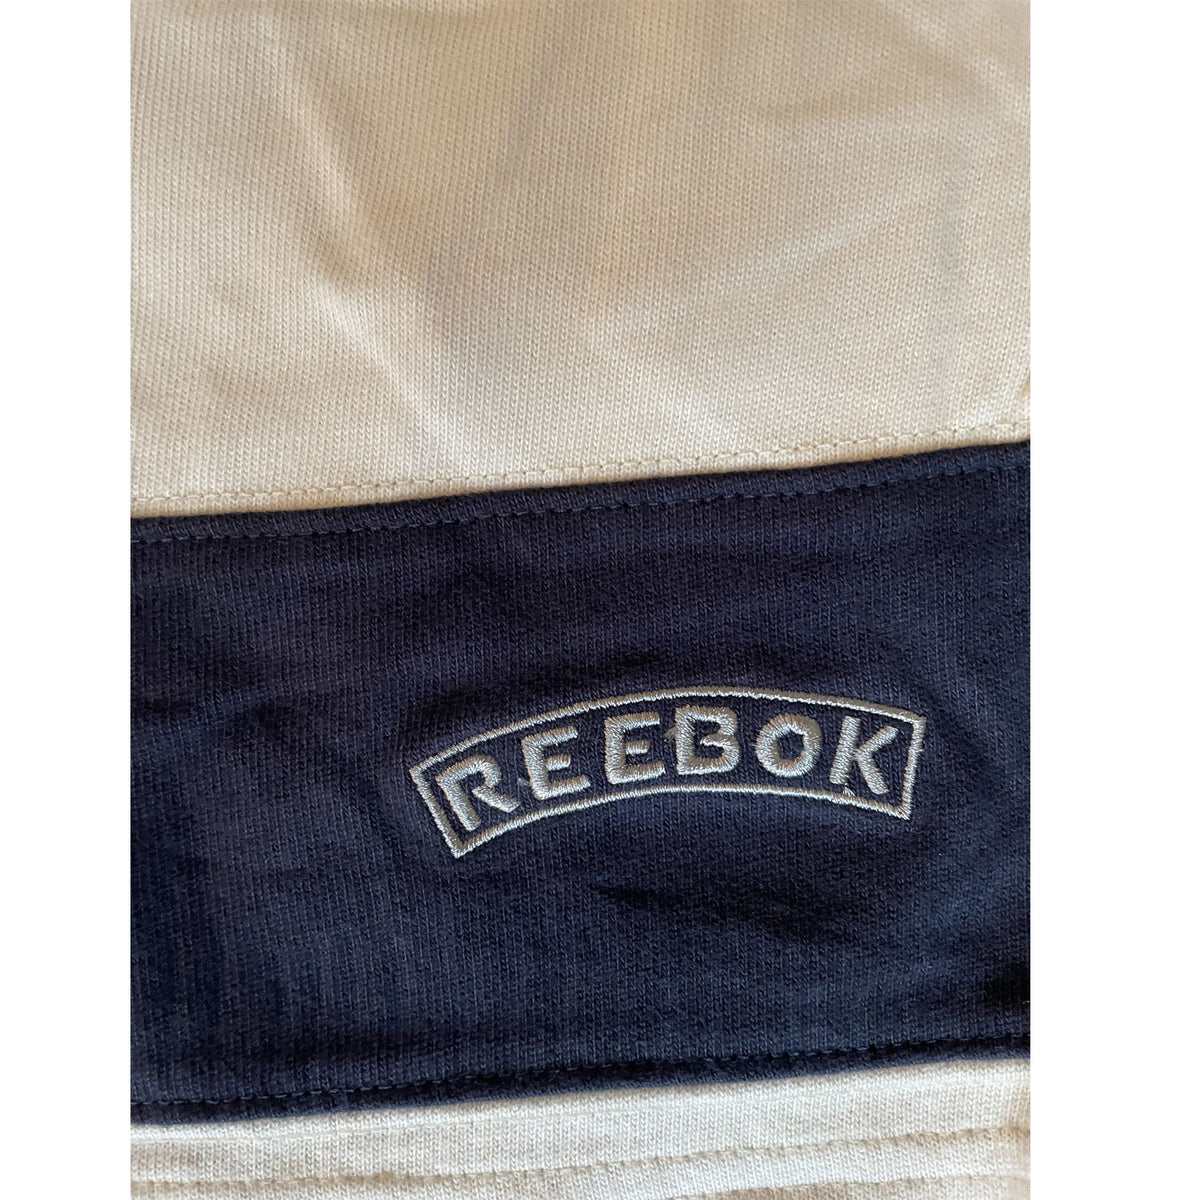 Reebok Original Mens Clearance Contrast Big Logo Shorts